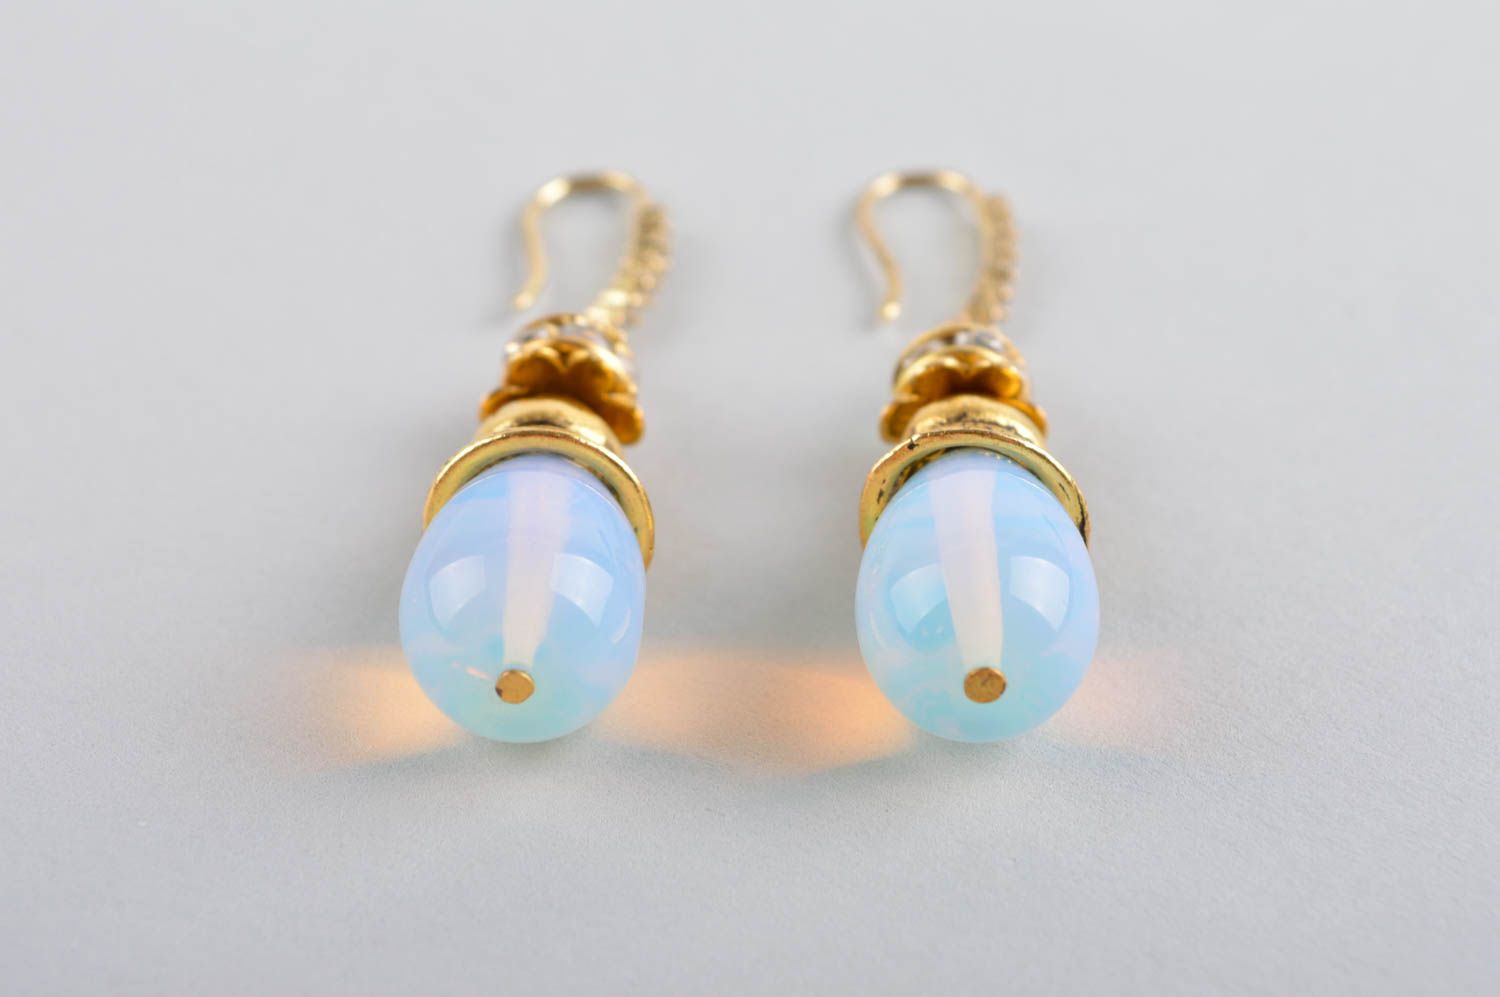 Handmade jewelry gemstone accessories designer accessories earrings for women photo 4